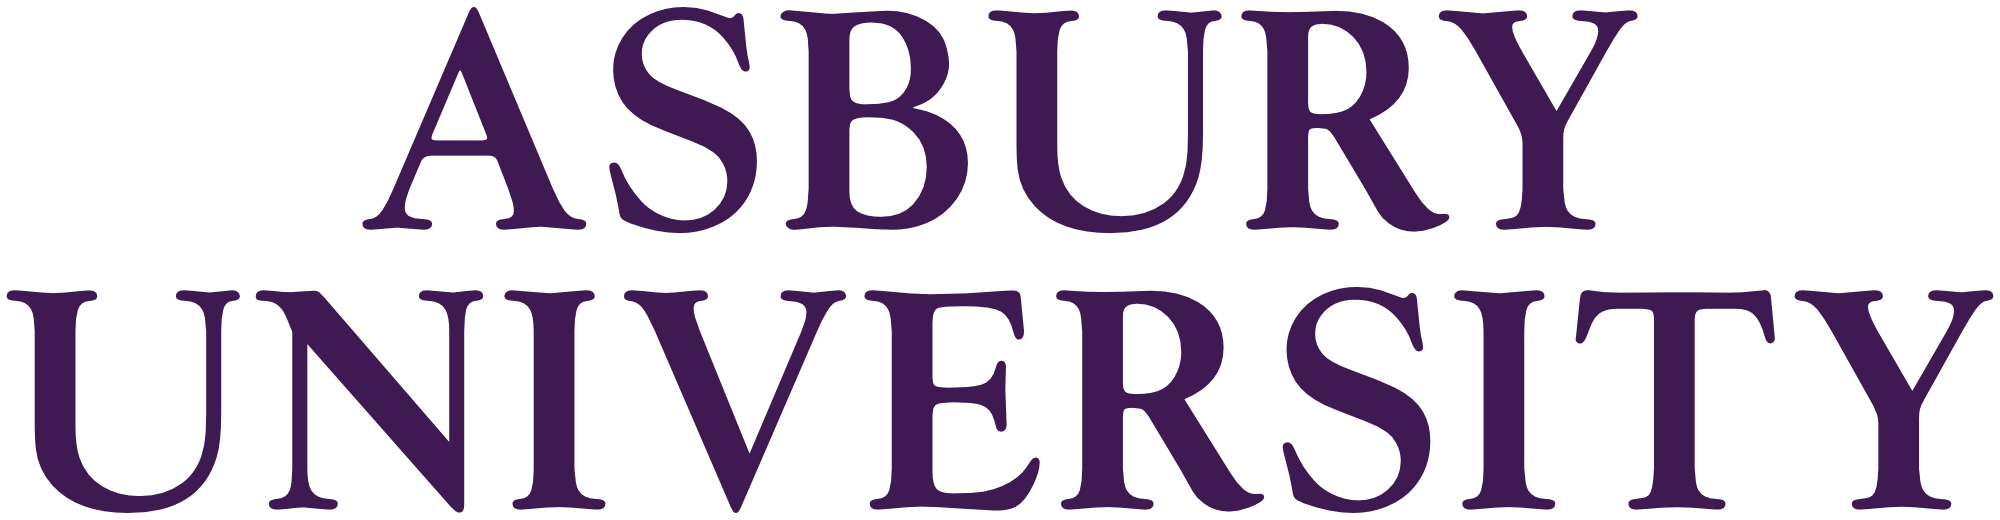 Asbury University Logo Wordmark 2